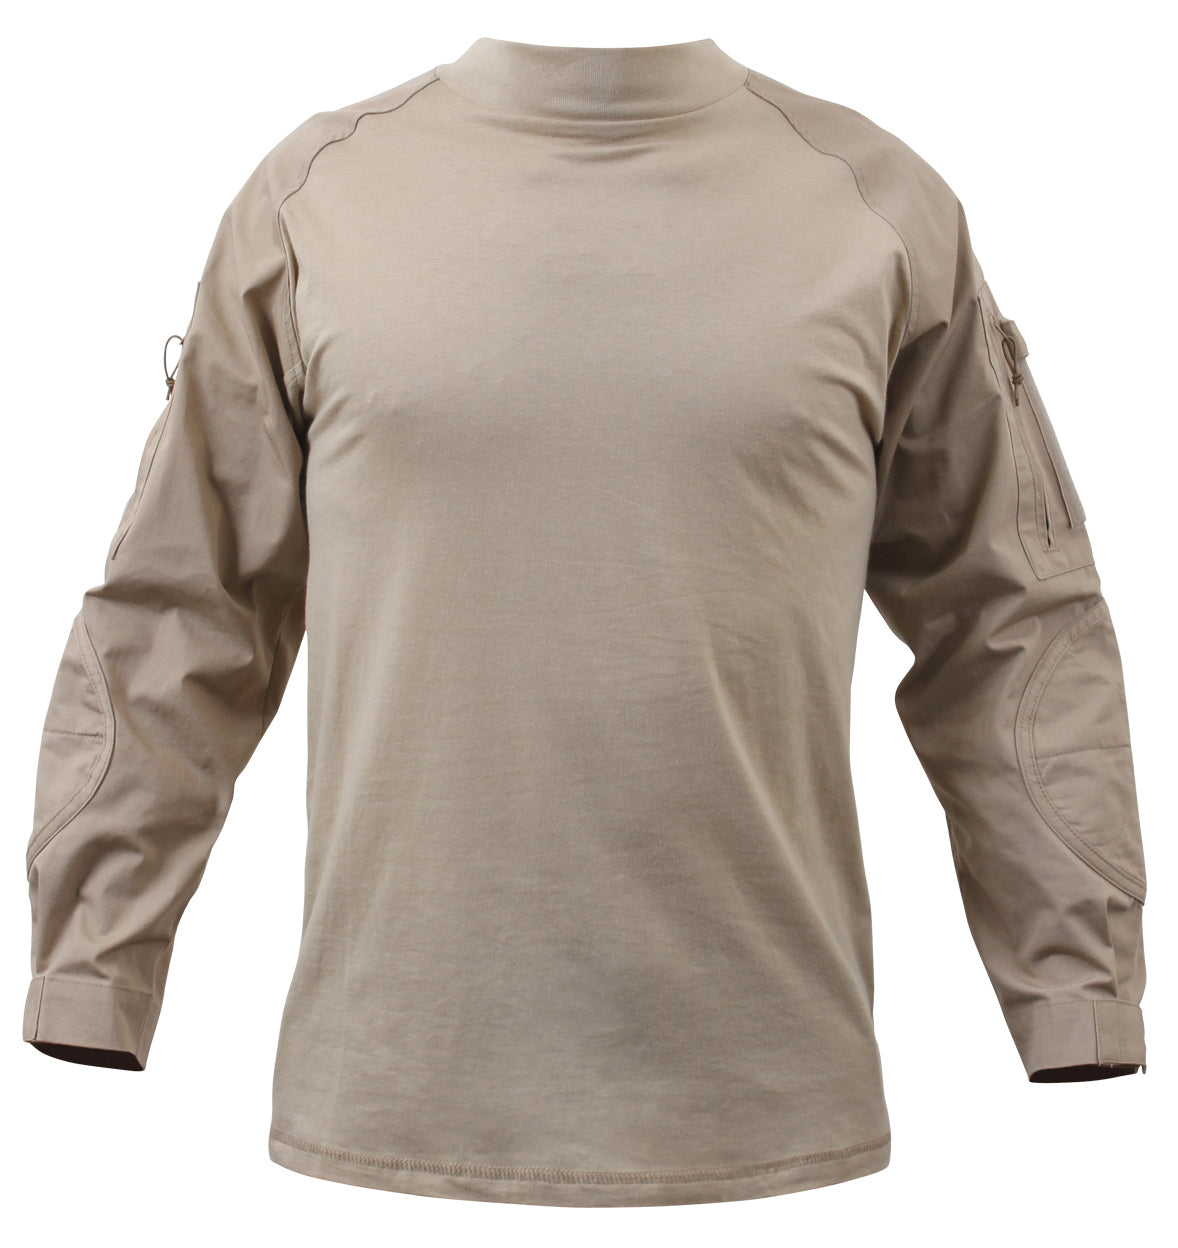 [Military][Fire Retardant] Acrylic/Cotton/Nylon/Cotton Combat Shirts Desert Sand